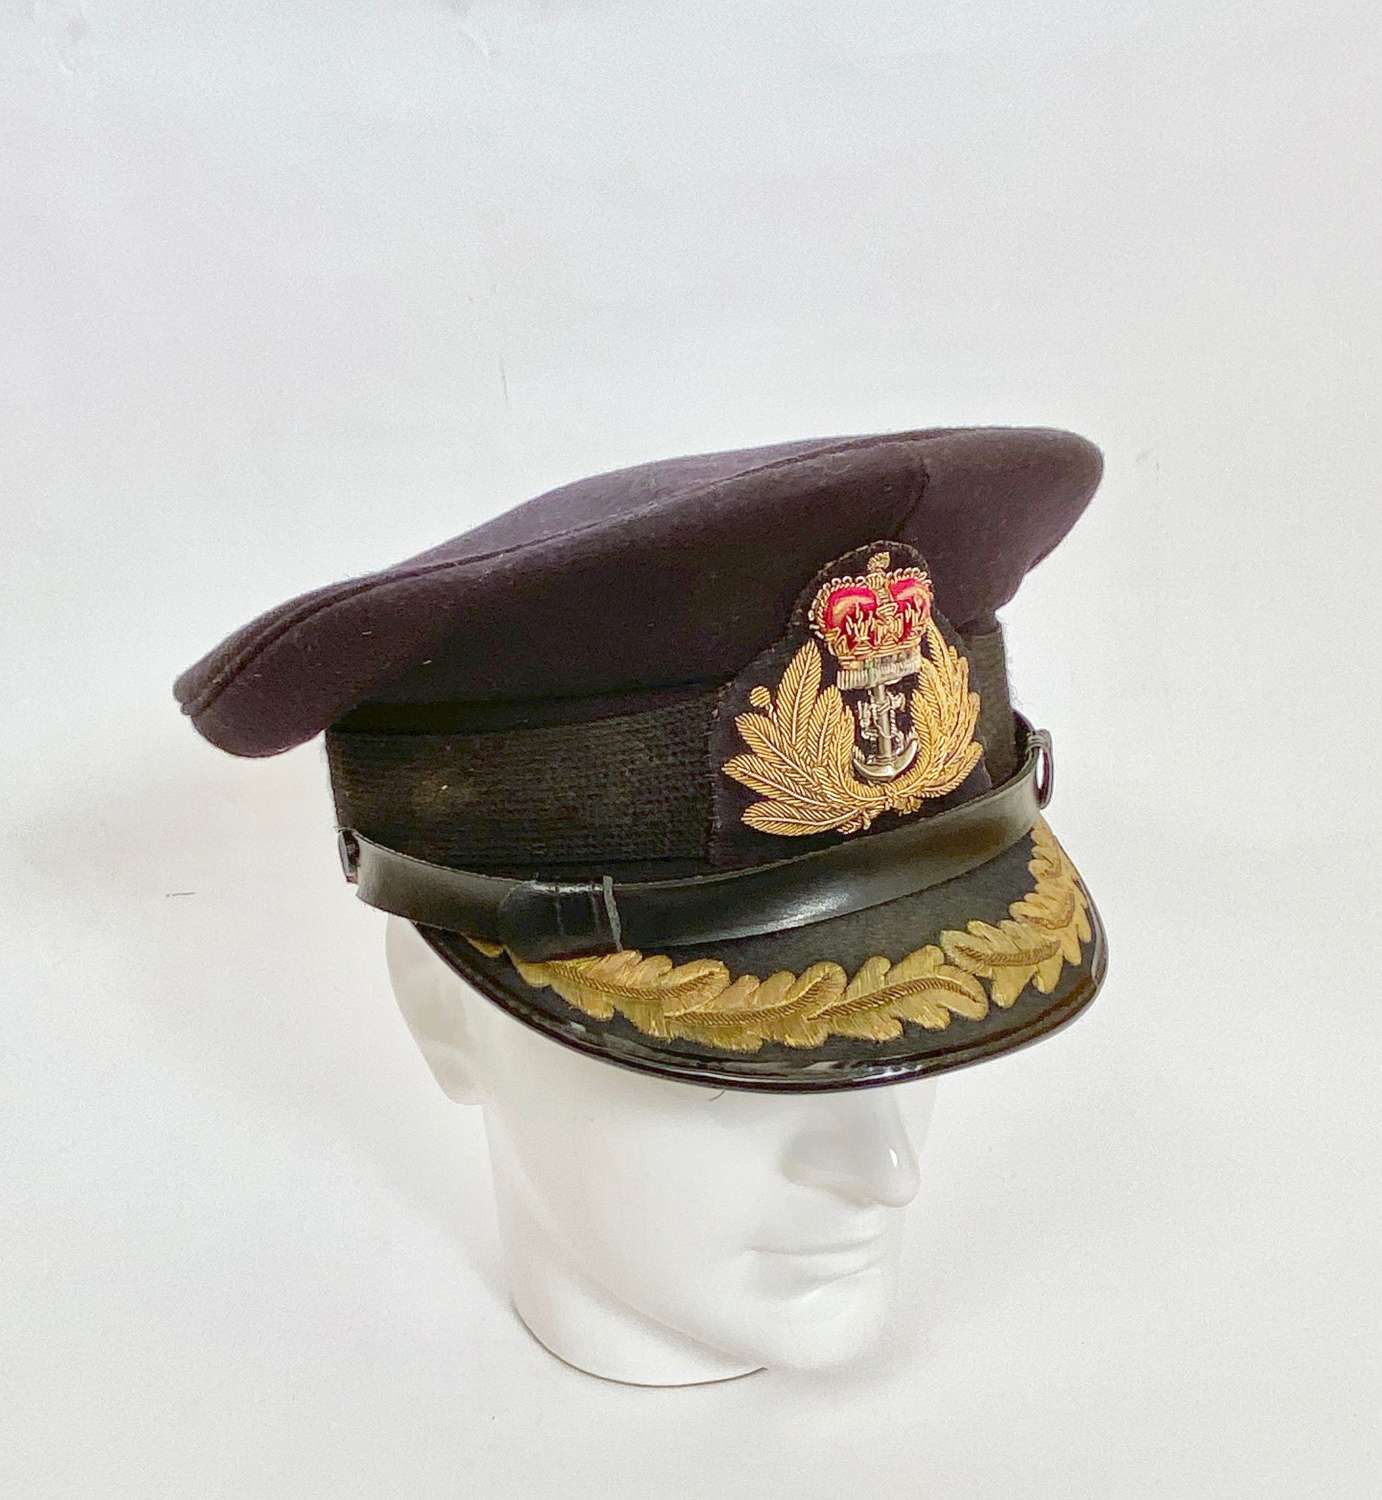 Cold War Royal Navy Commanders / Captains Cap.